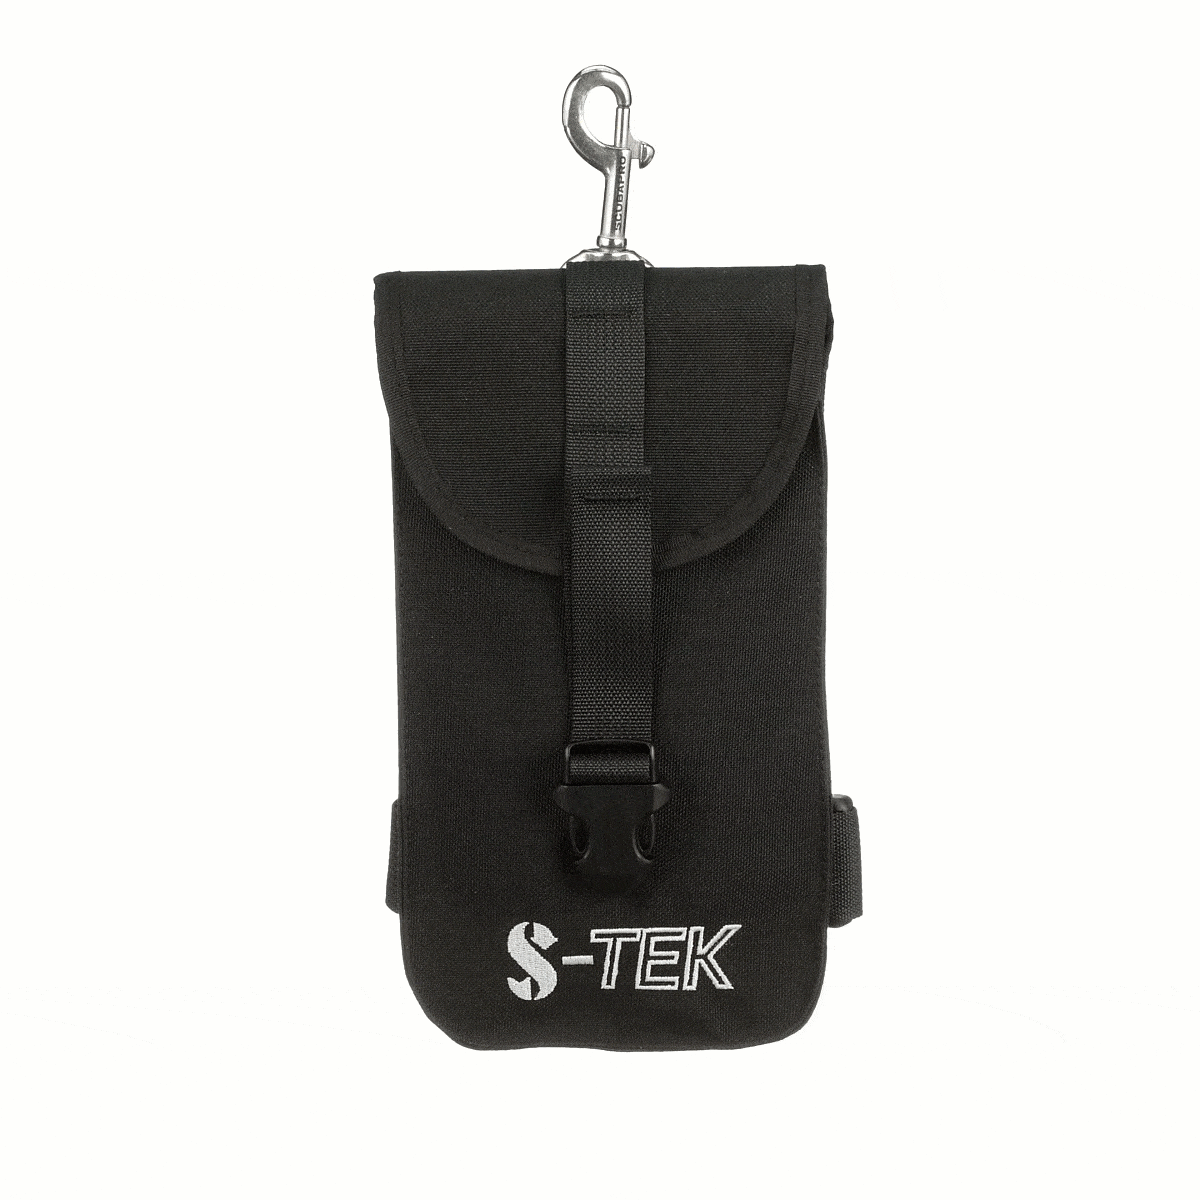 S-Tek Expedition Thigh Pocket - 360 spin.